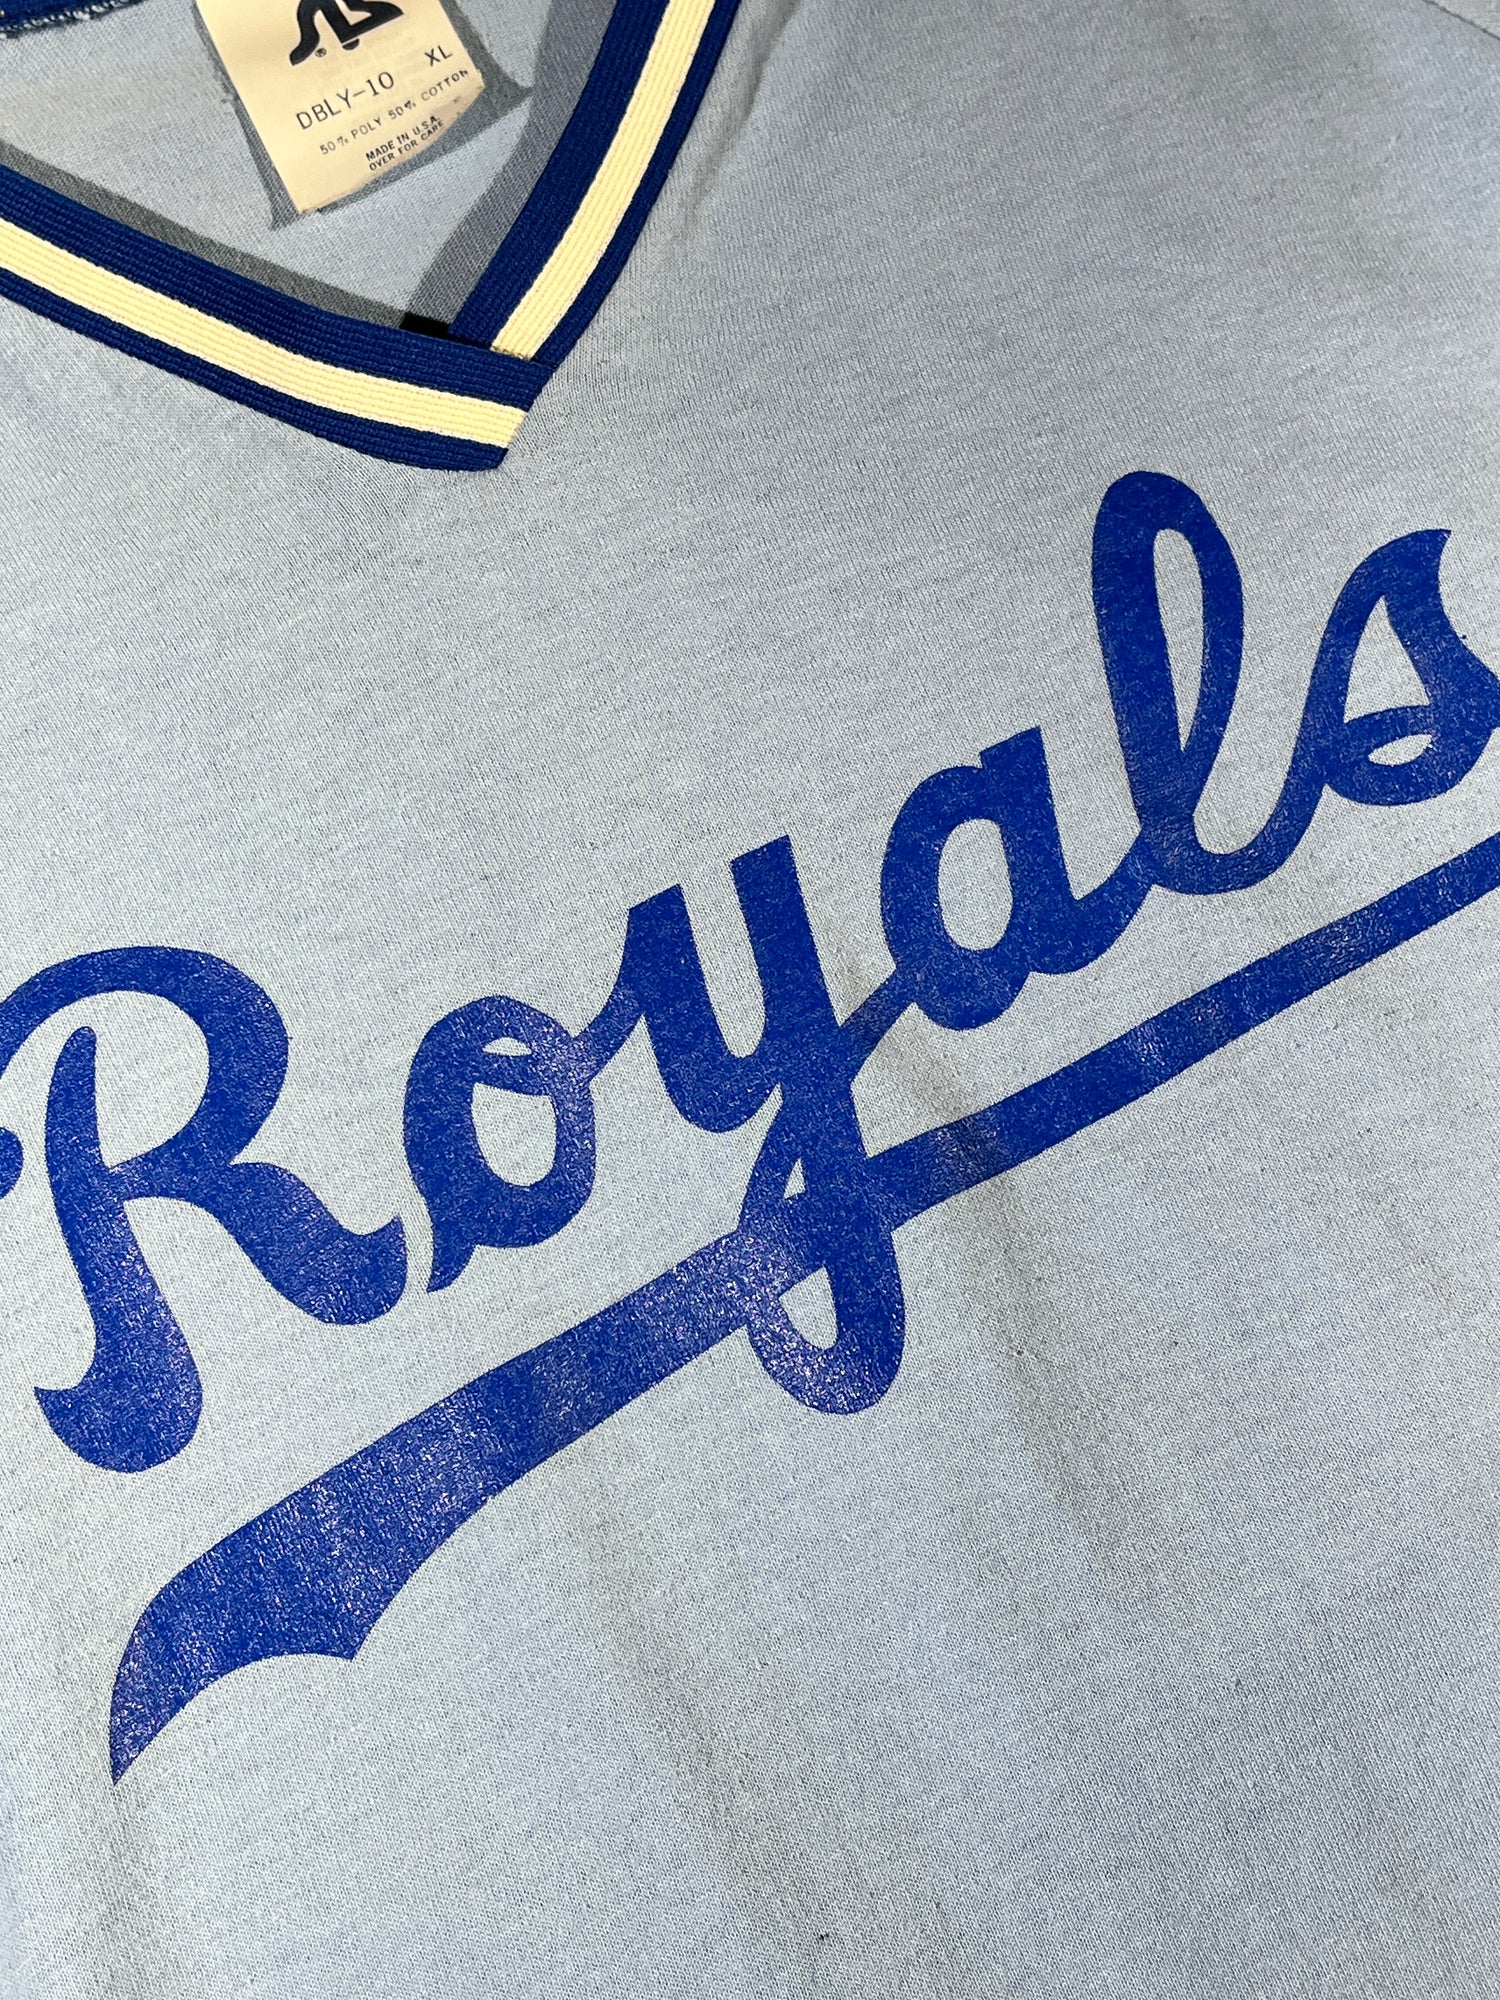 Glorydays Fine Goods Vintage Royals Jersey Top T-Shirt Baseball Cut Kansas City MLB USA Made